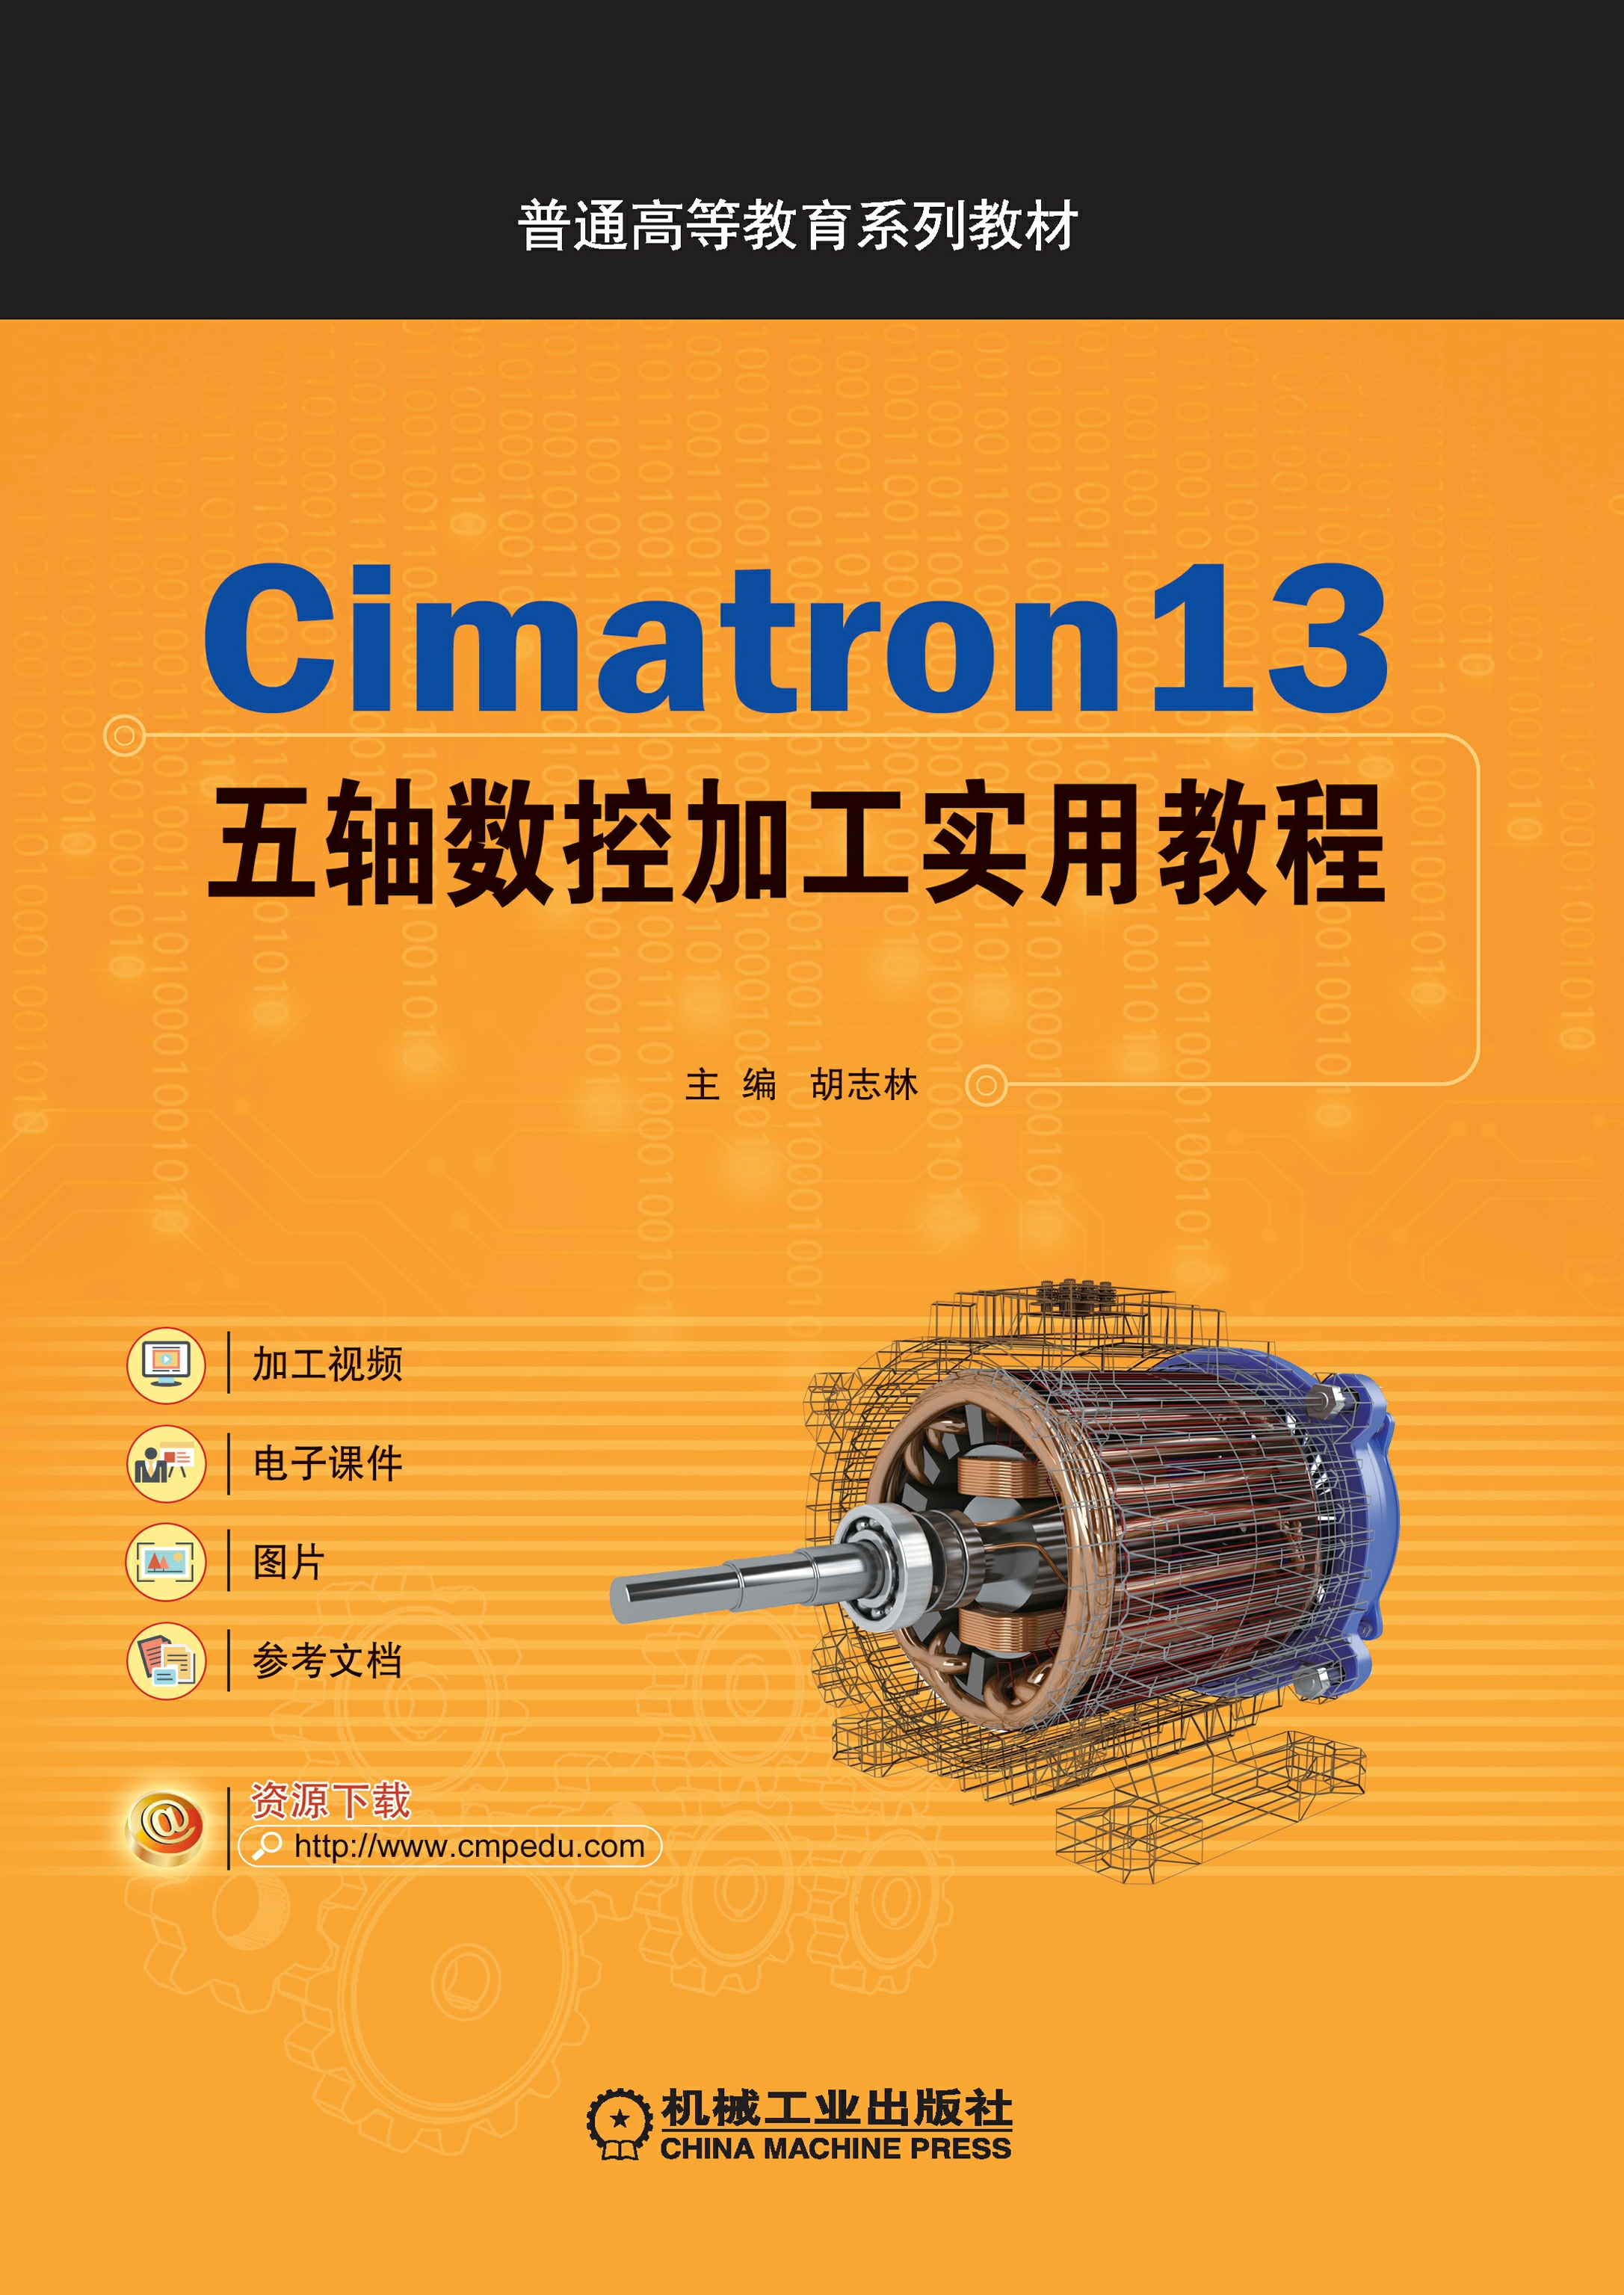 Cimatron13五轴数控加工实用教程